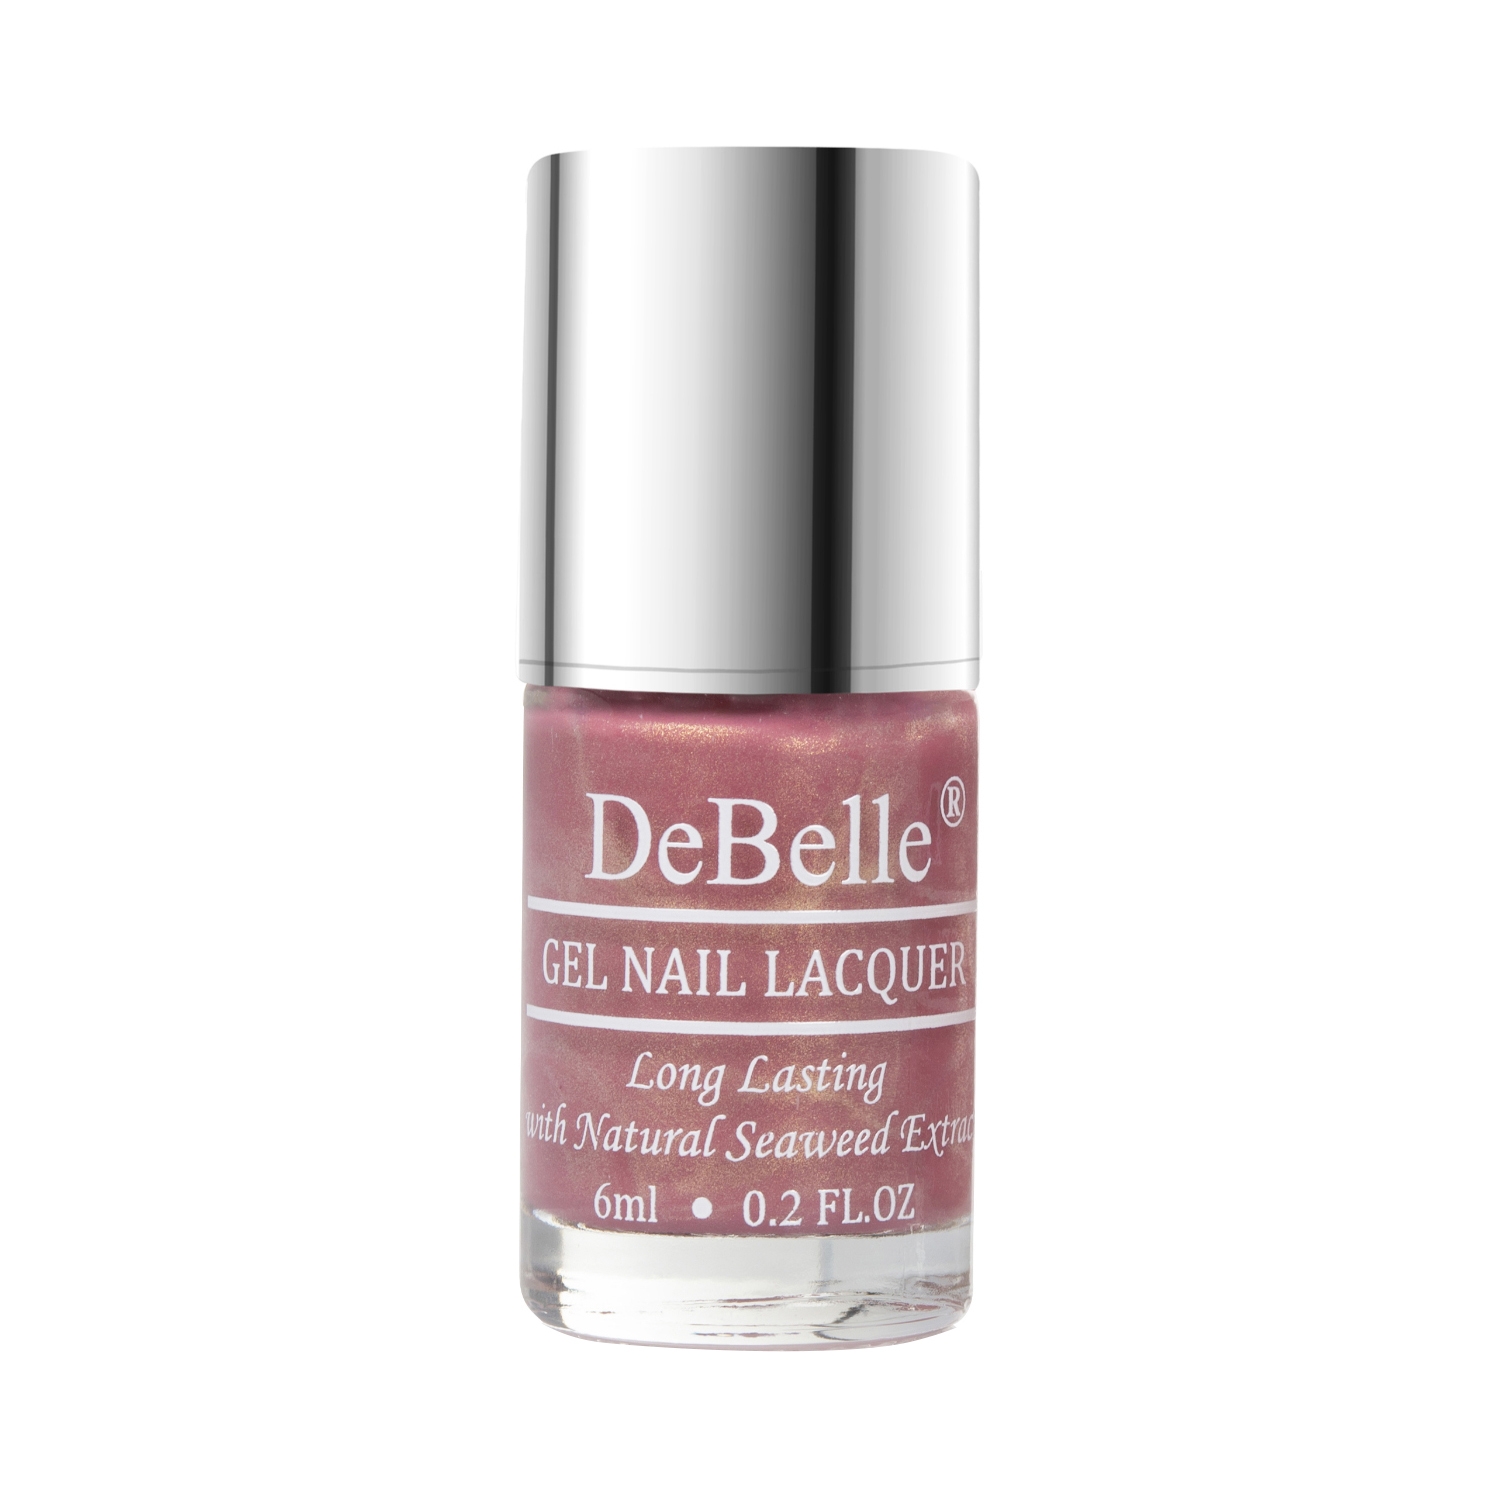 DeBelle | DeBelle Gel Nail Lacquer - Poise Nicole (6ml)